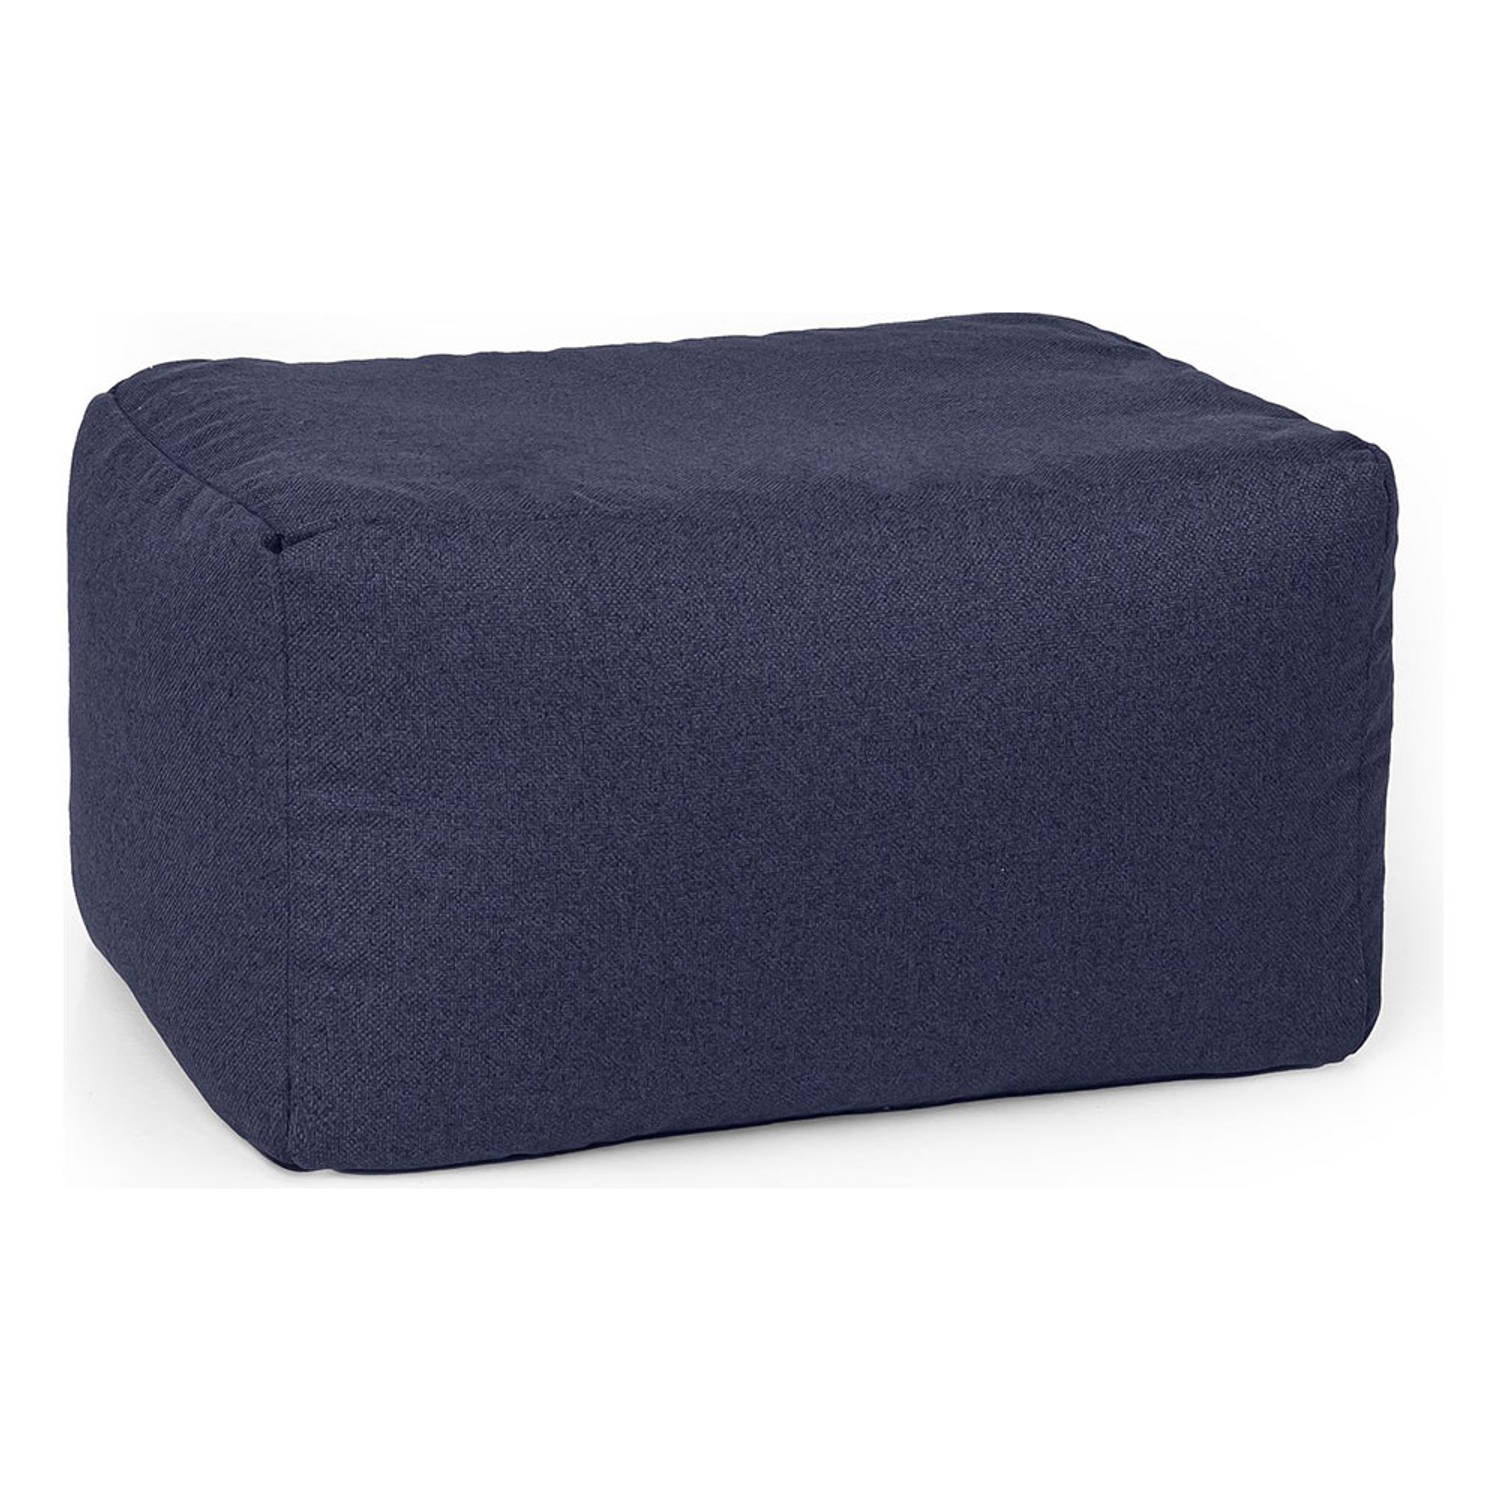 Drop & Sit duurzame zitzak poef donkerblauw 55x75x45cm